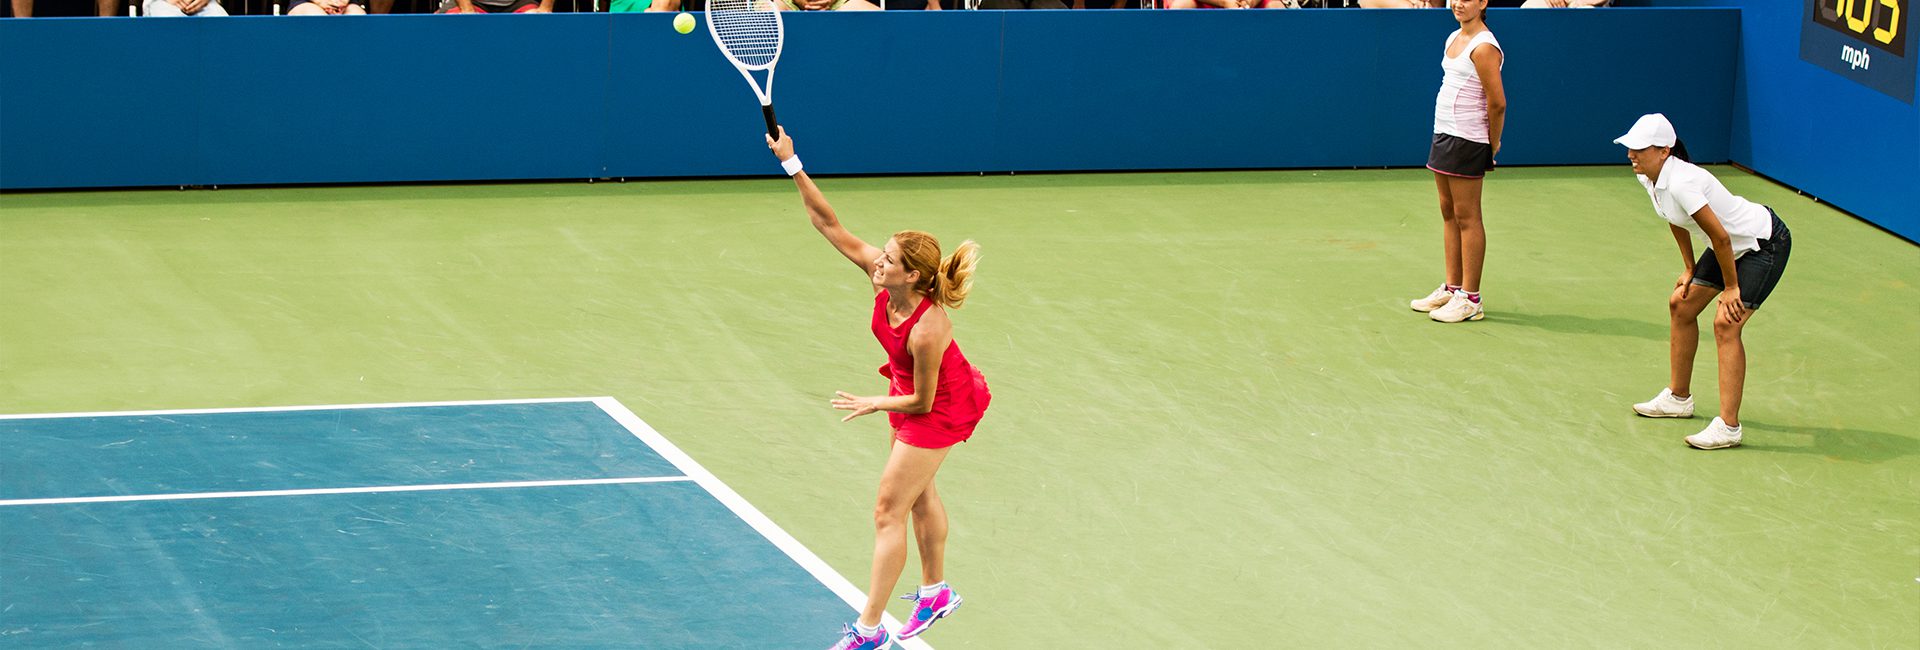 woman playing a tennis match